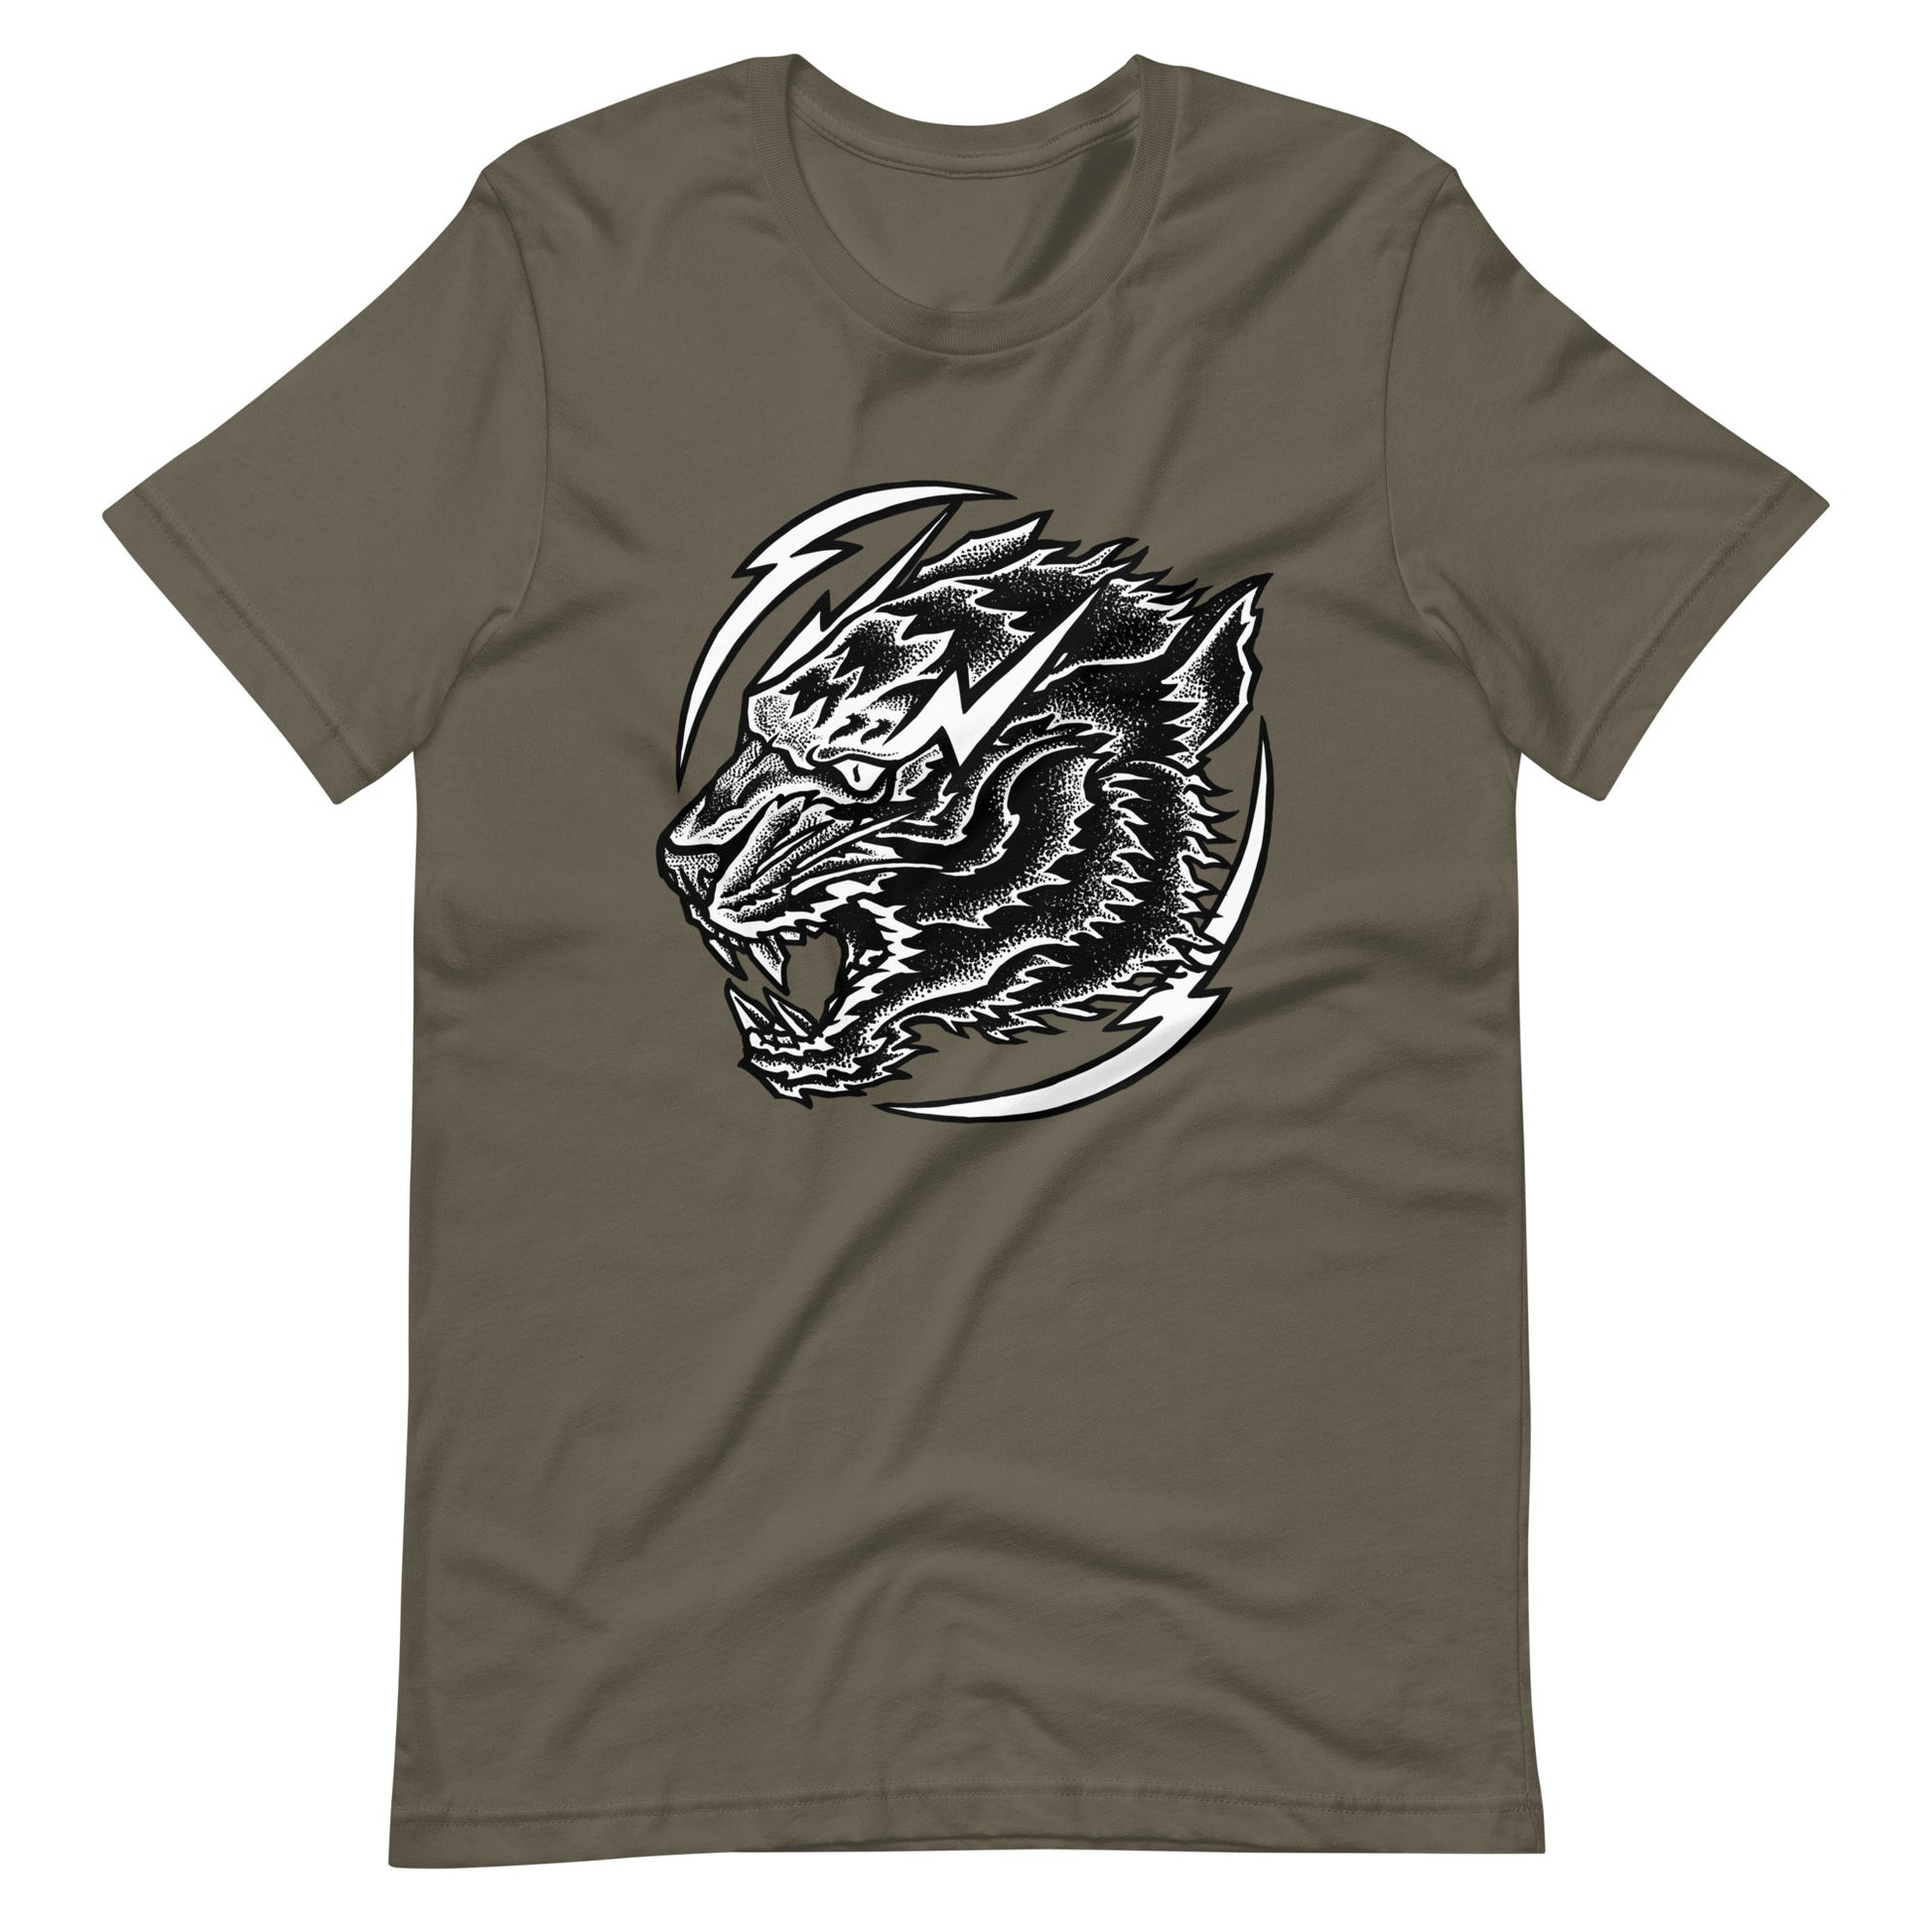 Thunder Tiger - Men's t-shirt - Army Front